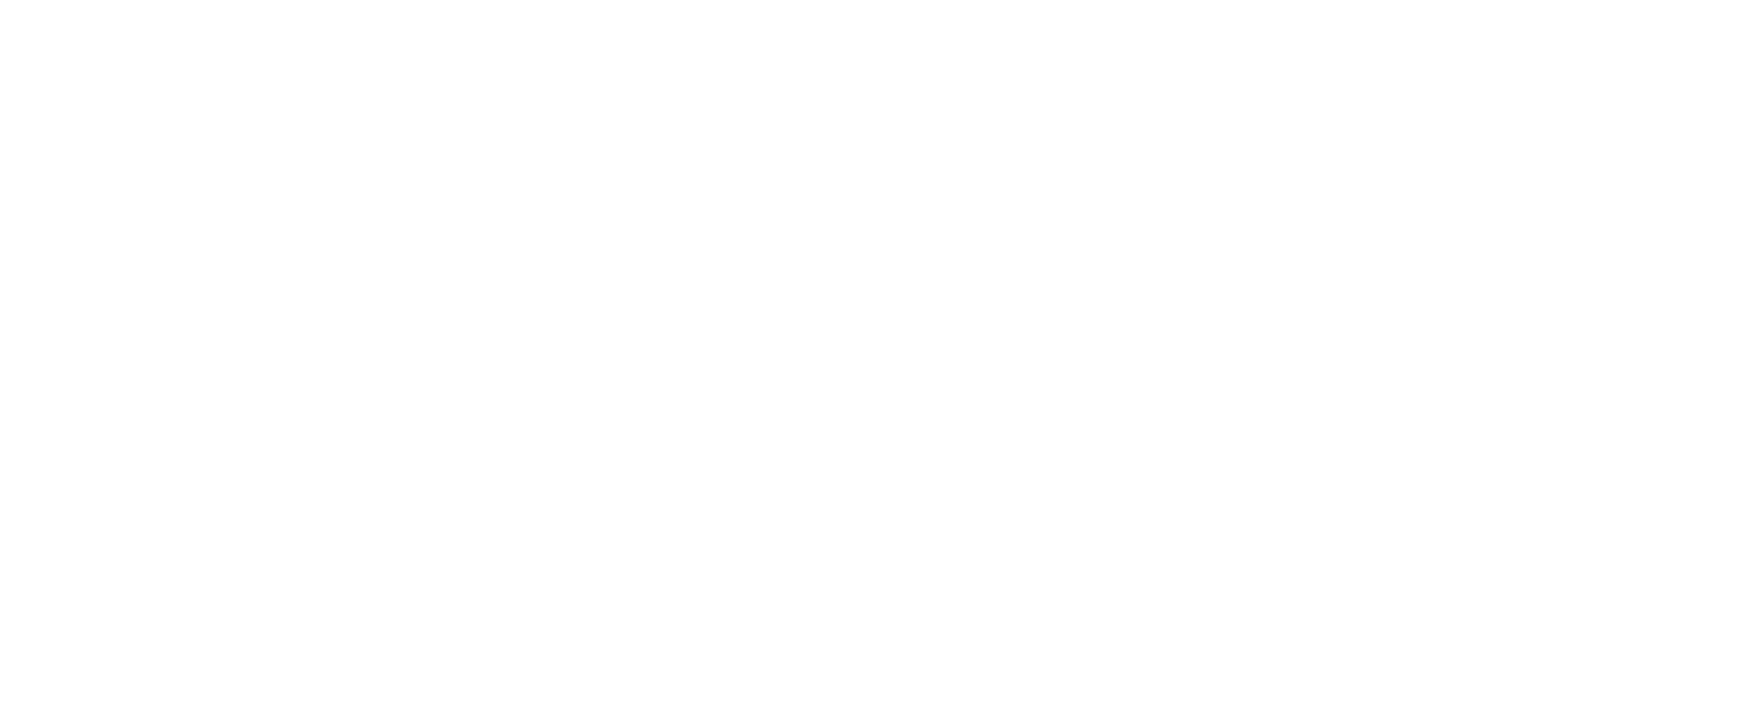 safety grating